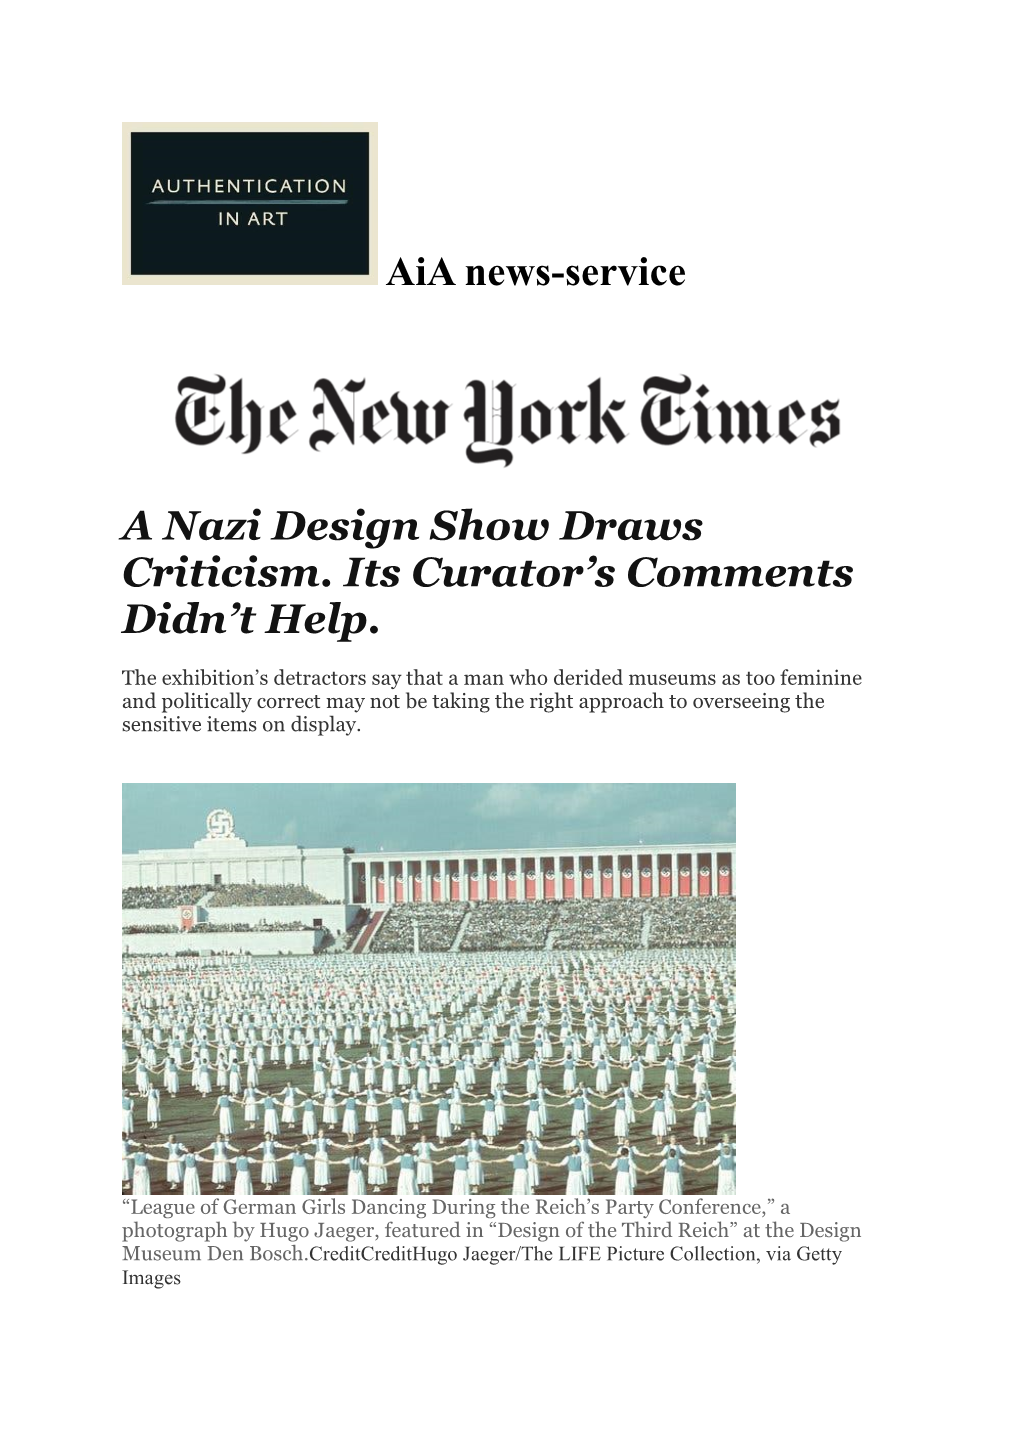 Aia News-Service a Nazi Design Show Draws Criticism. Its Curator's